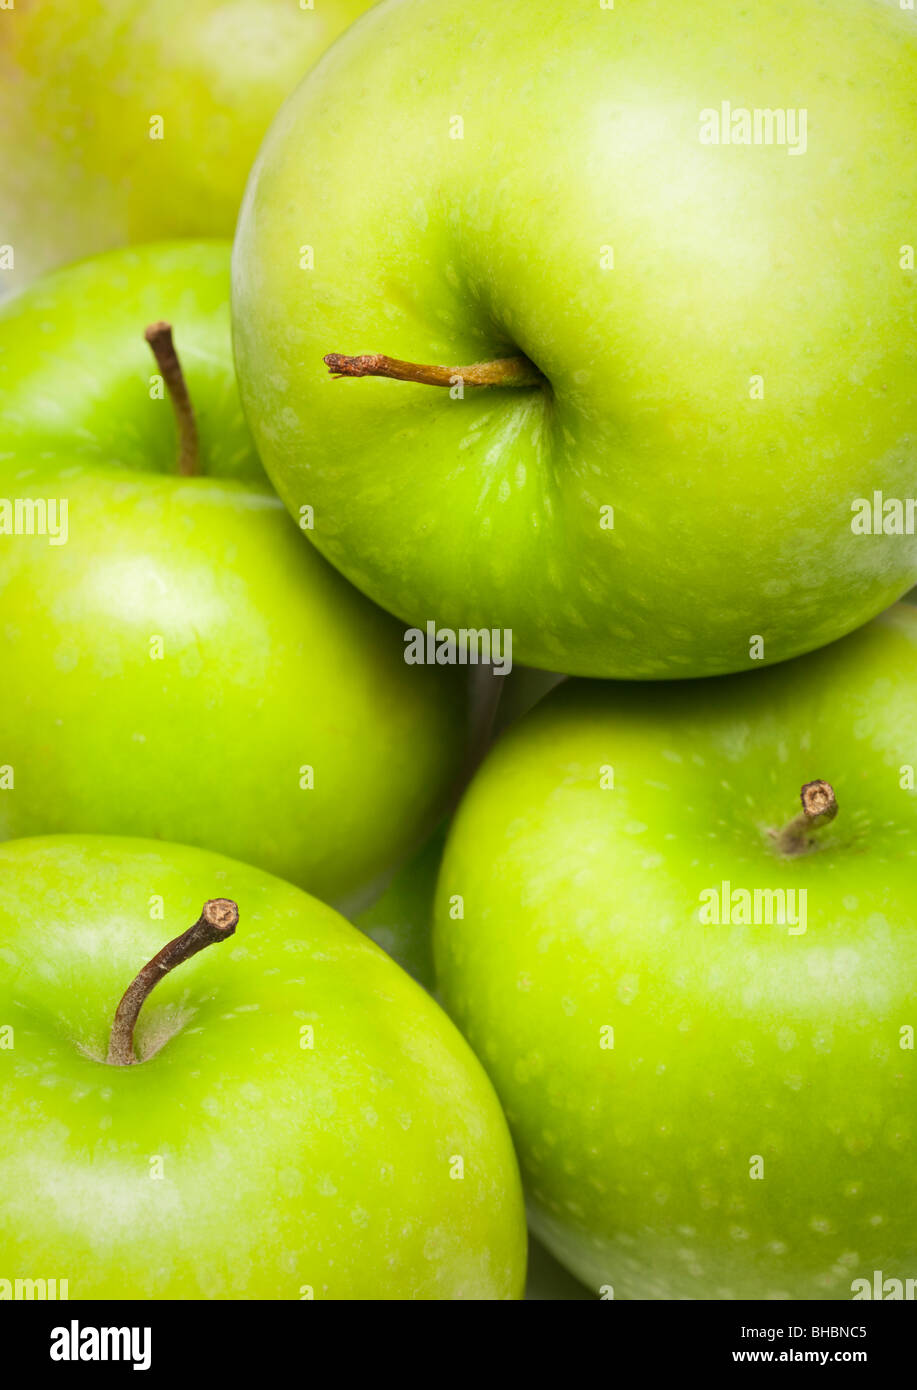 Grüne Äpfel Stockfoto